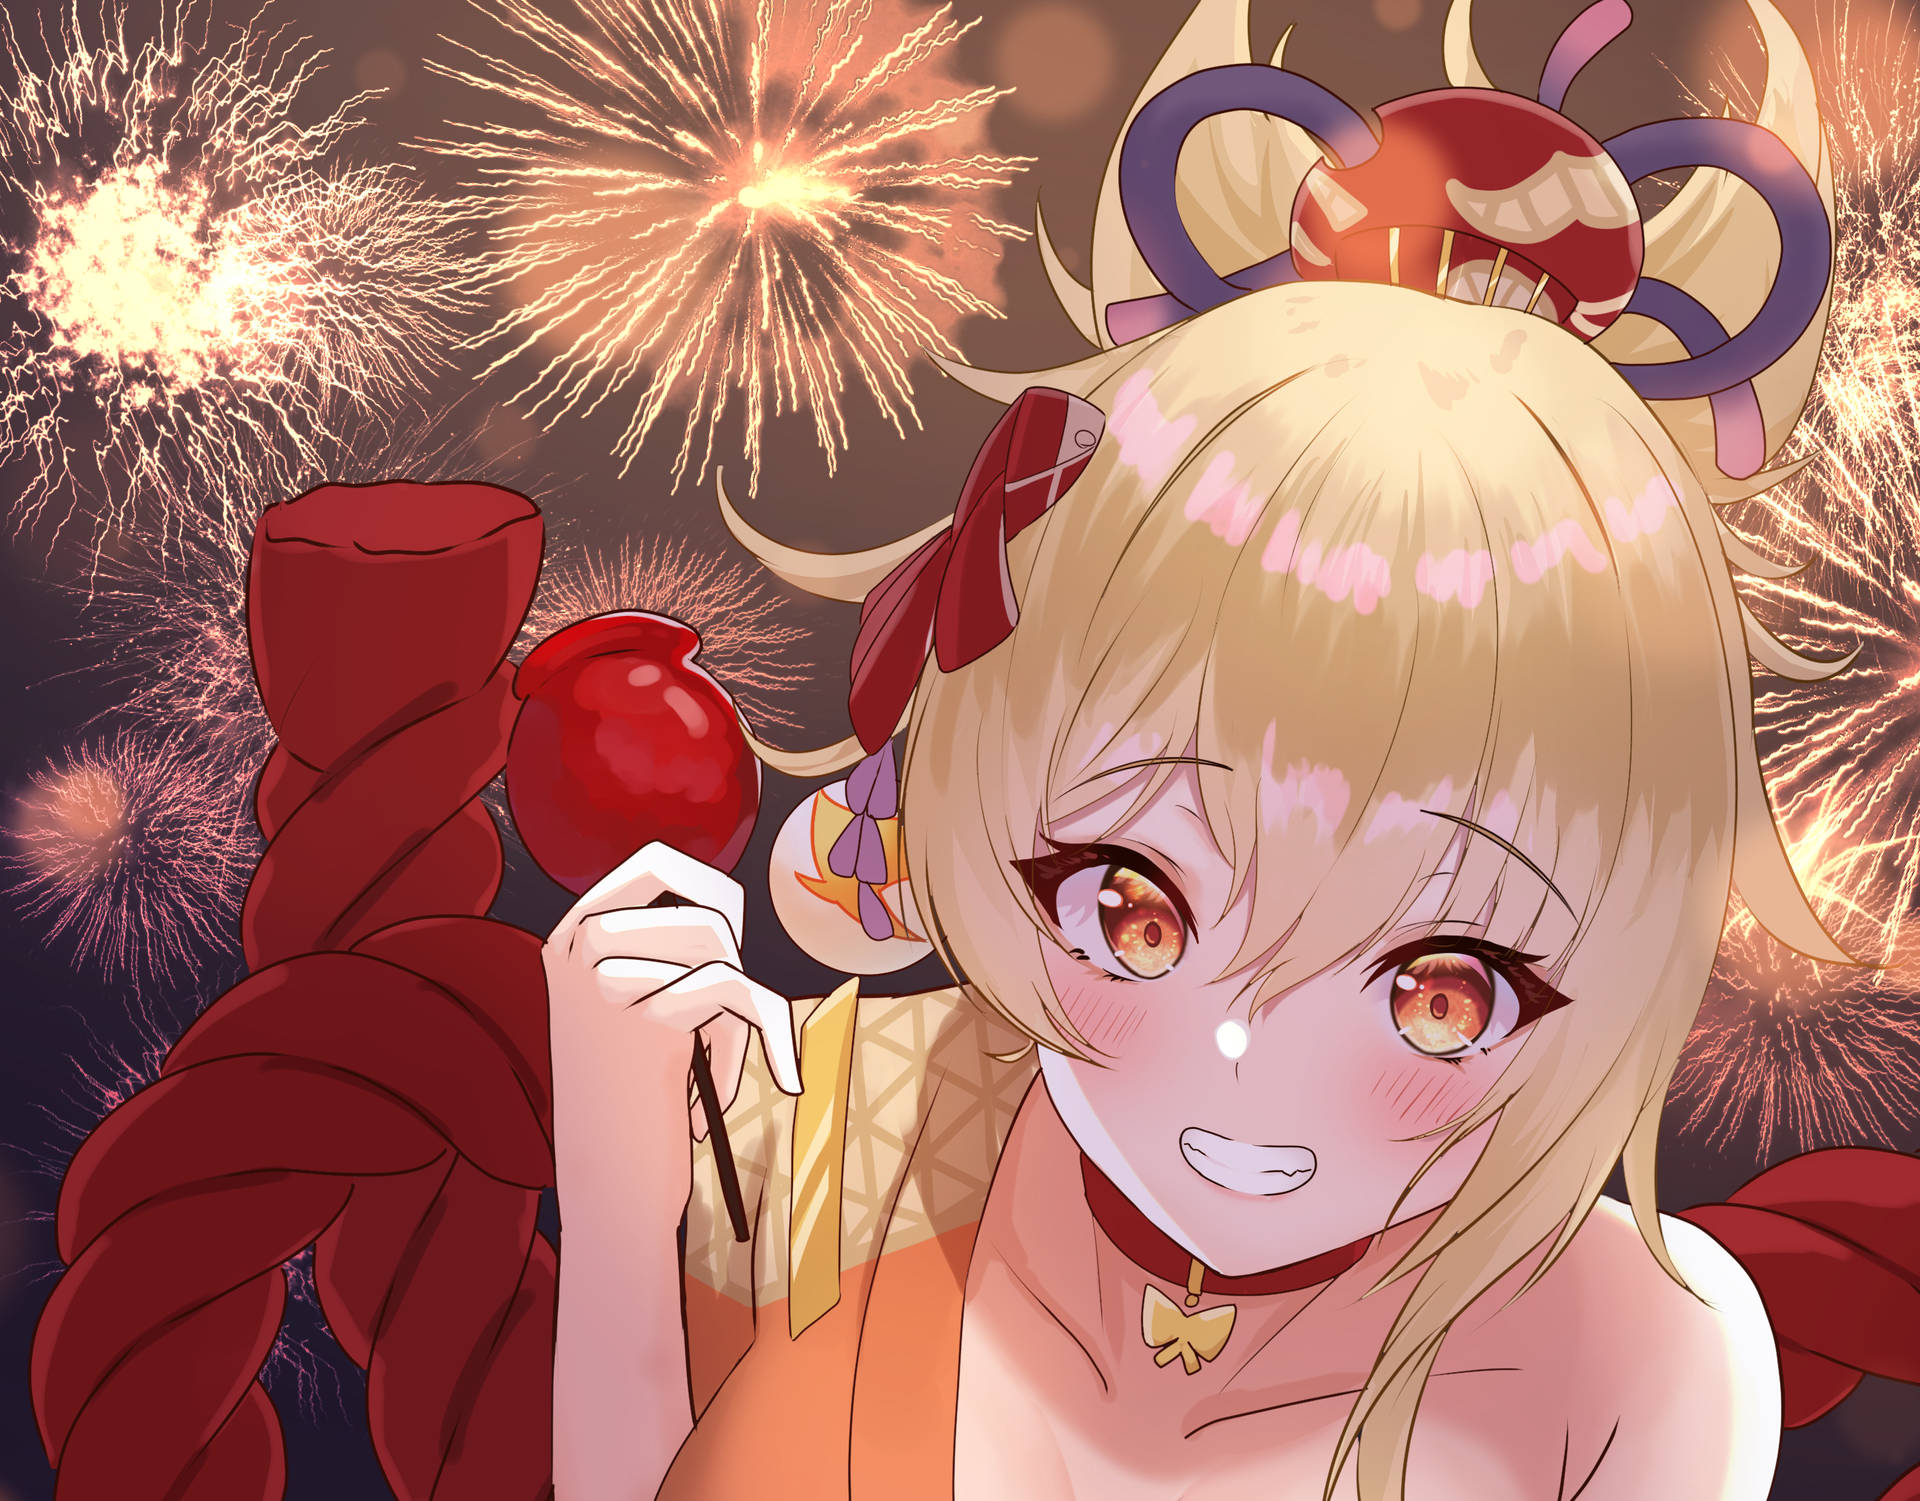 Yoimiya Smiling With Fireworks Wallpaper